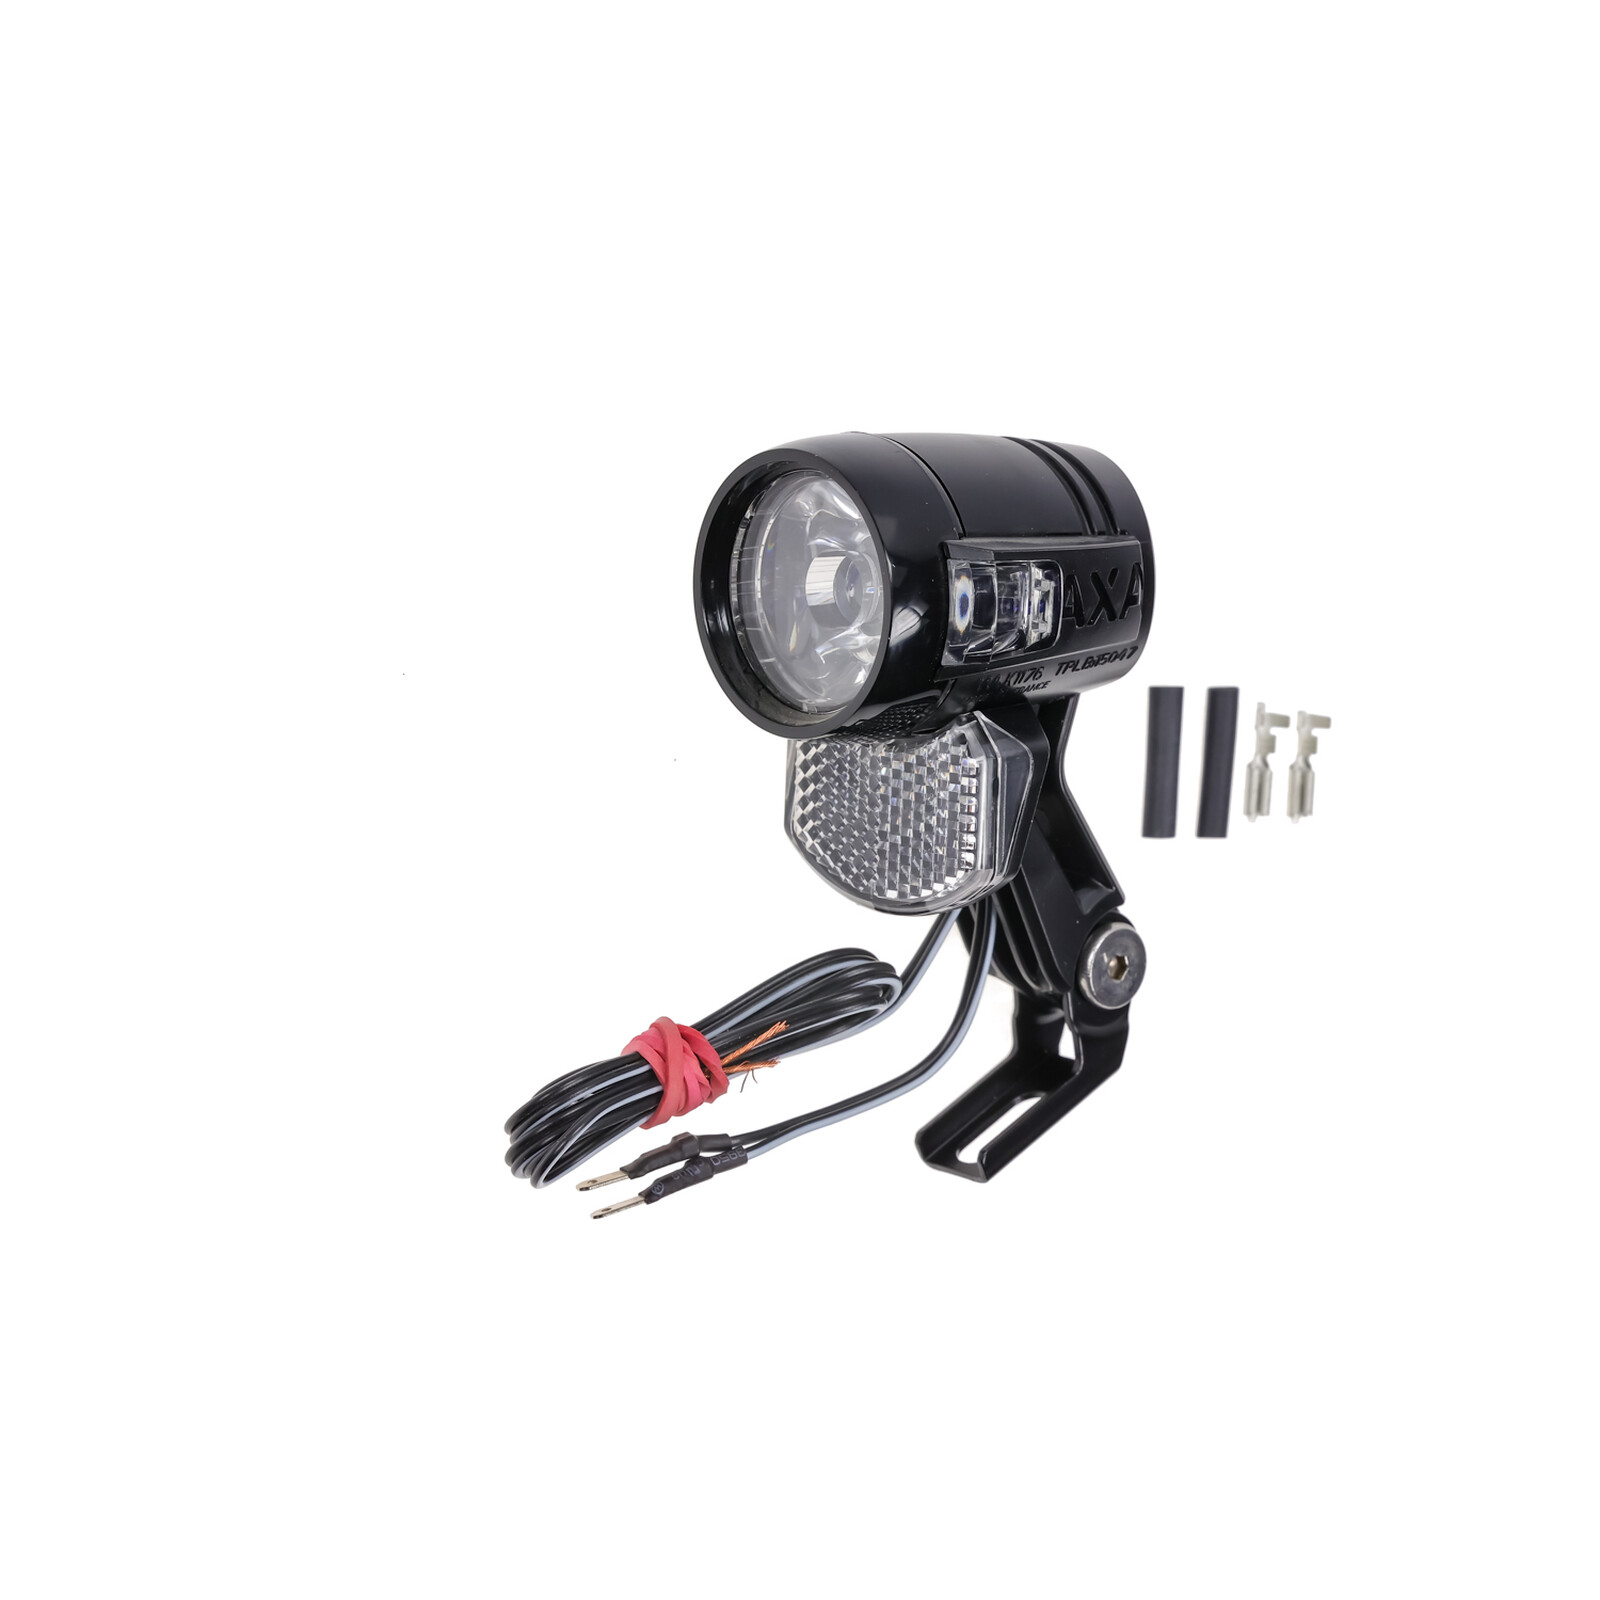 https://www.radversender.de/media/image/product/14616/lg/axa-blueline-30-switch-led-scheinwerfer-lampe-beleuchtung-dynamo-halter-kabel.jpg